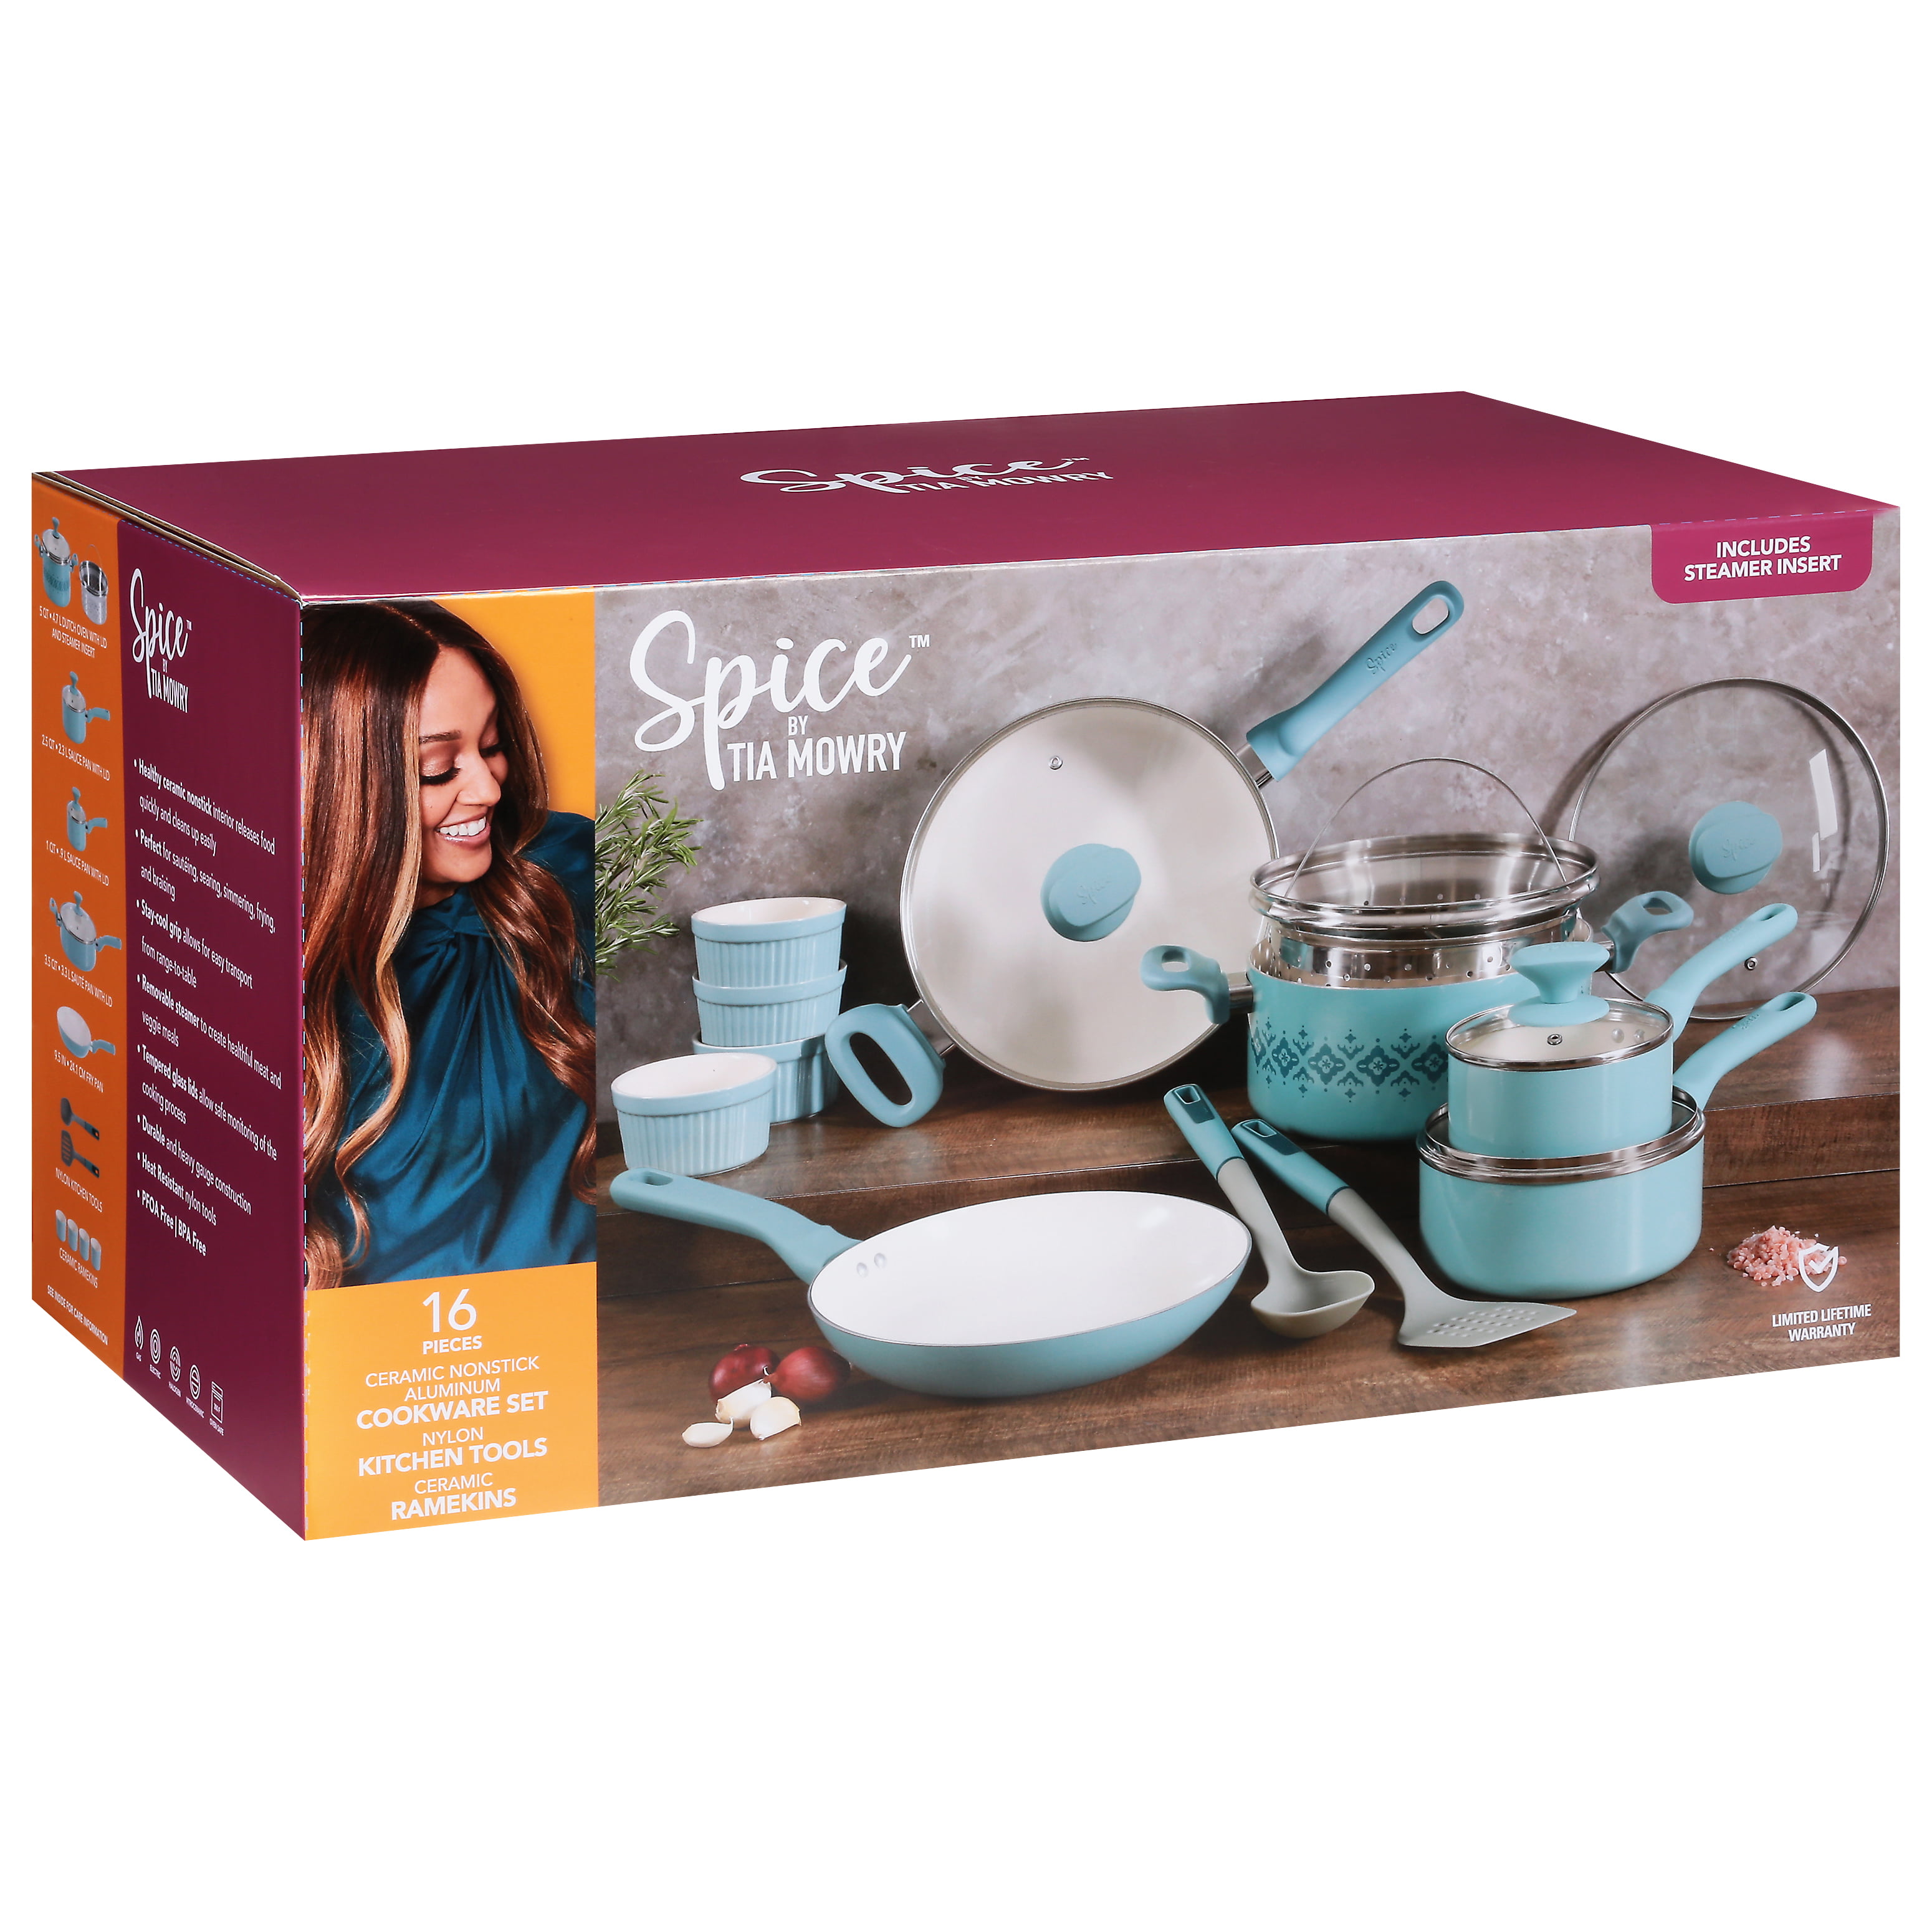 Spice By Tia Mowry Kitchen Tool Set, Savory Saffron, Ceramic Crock, 12 Pieces